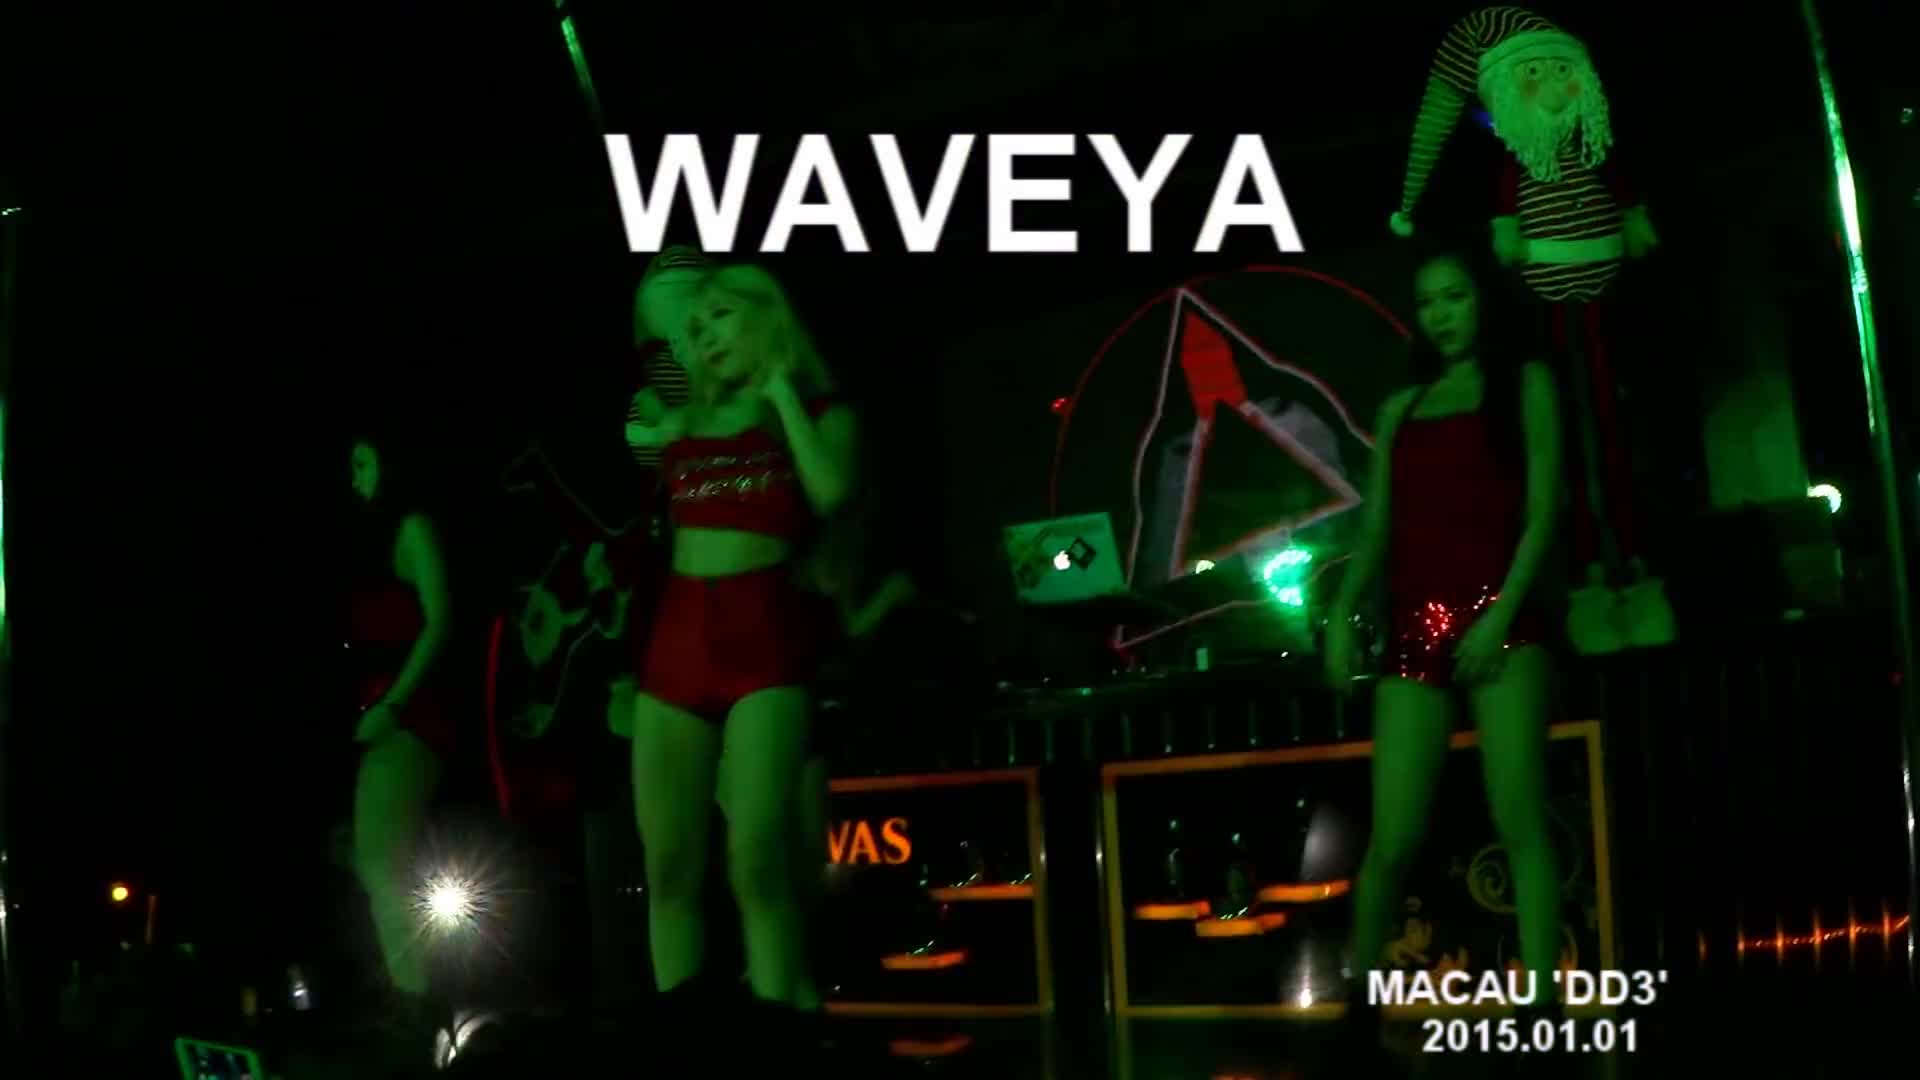 Waveya dance performance 2 at Macau